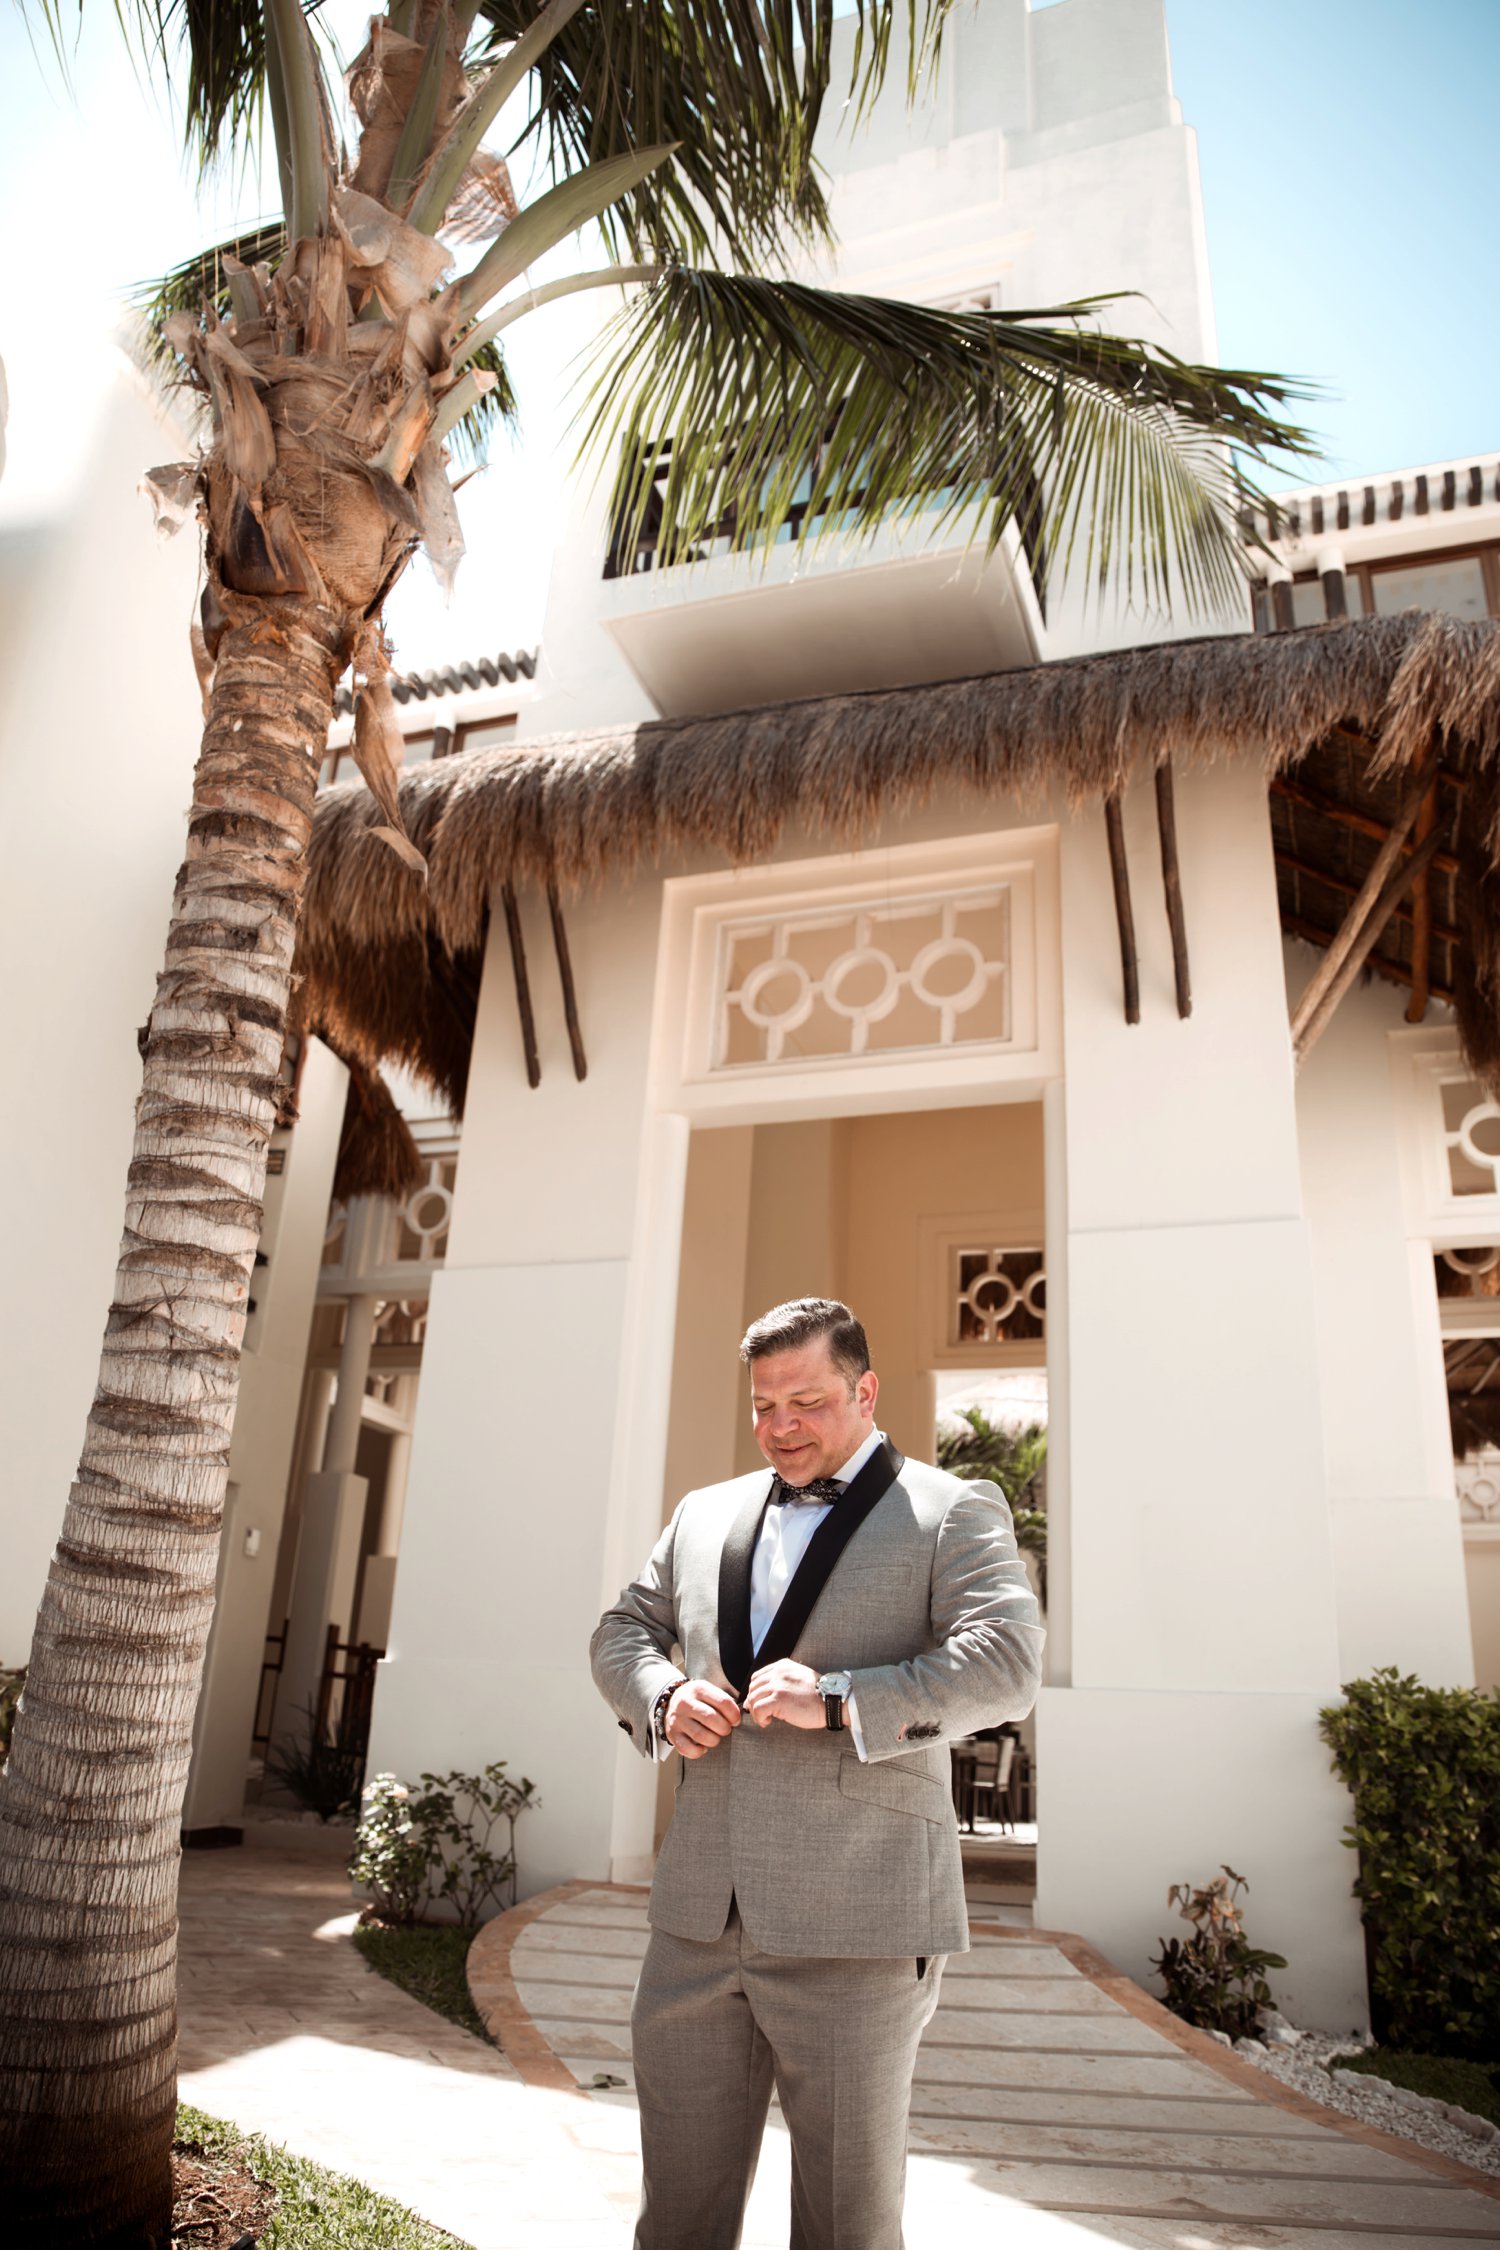  images by feliciathephotographer.com | destination wedding photographer | mexico | tropical | fiji | venue | azul beach resort | riviera maya | getting ready | details | pre-ceremony | palm trees | grey suit | black tie attire |